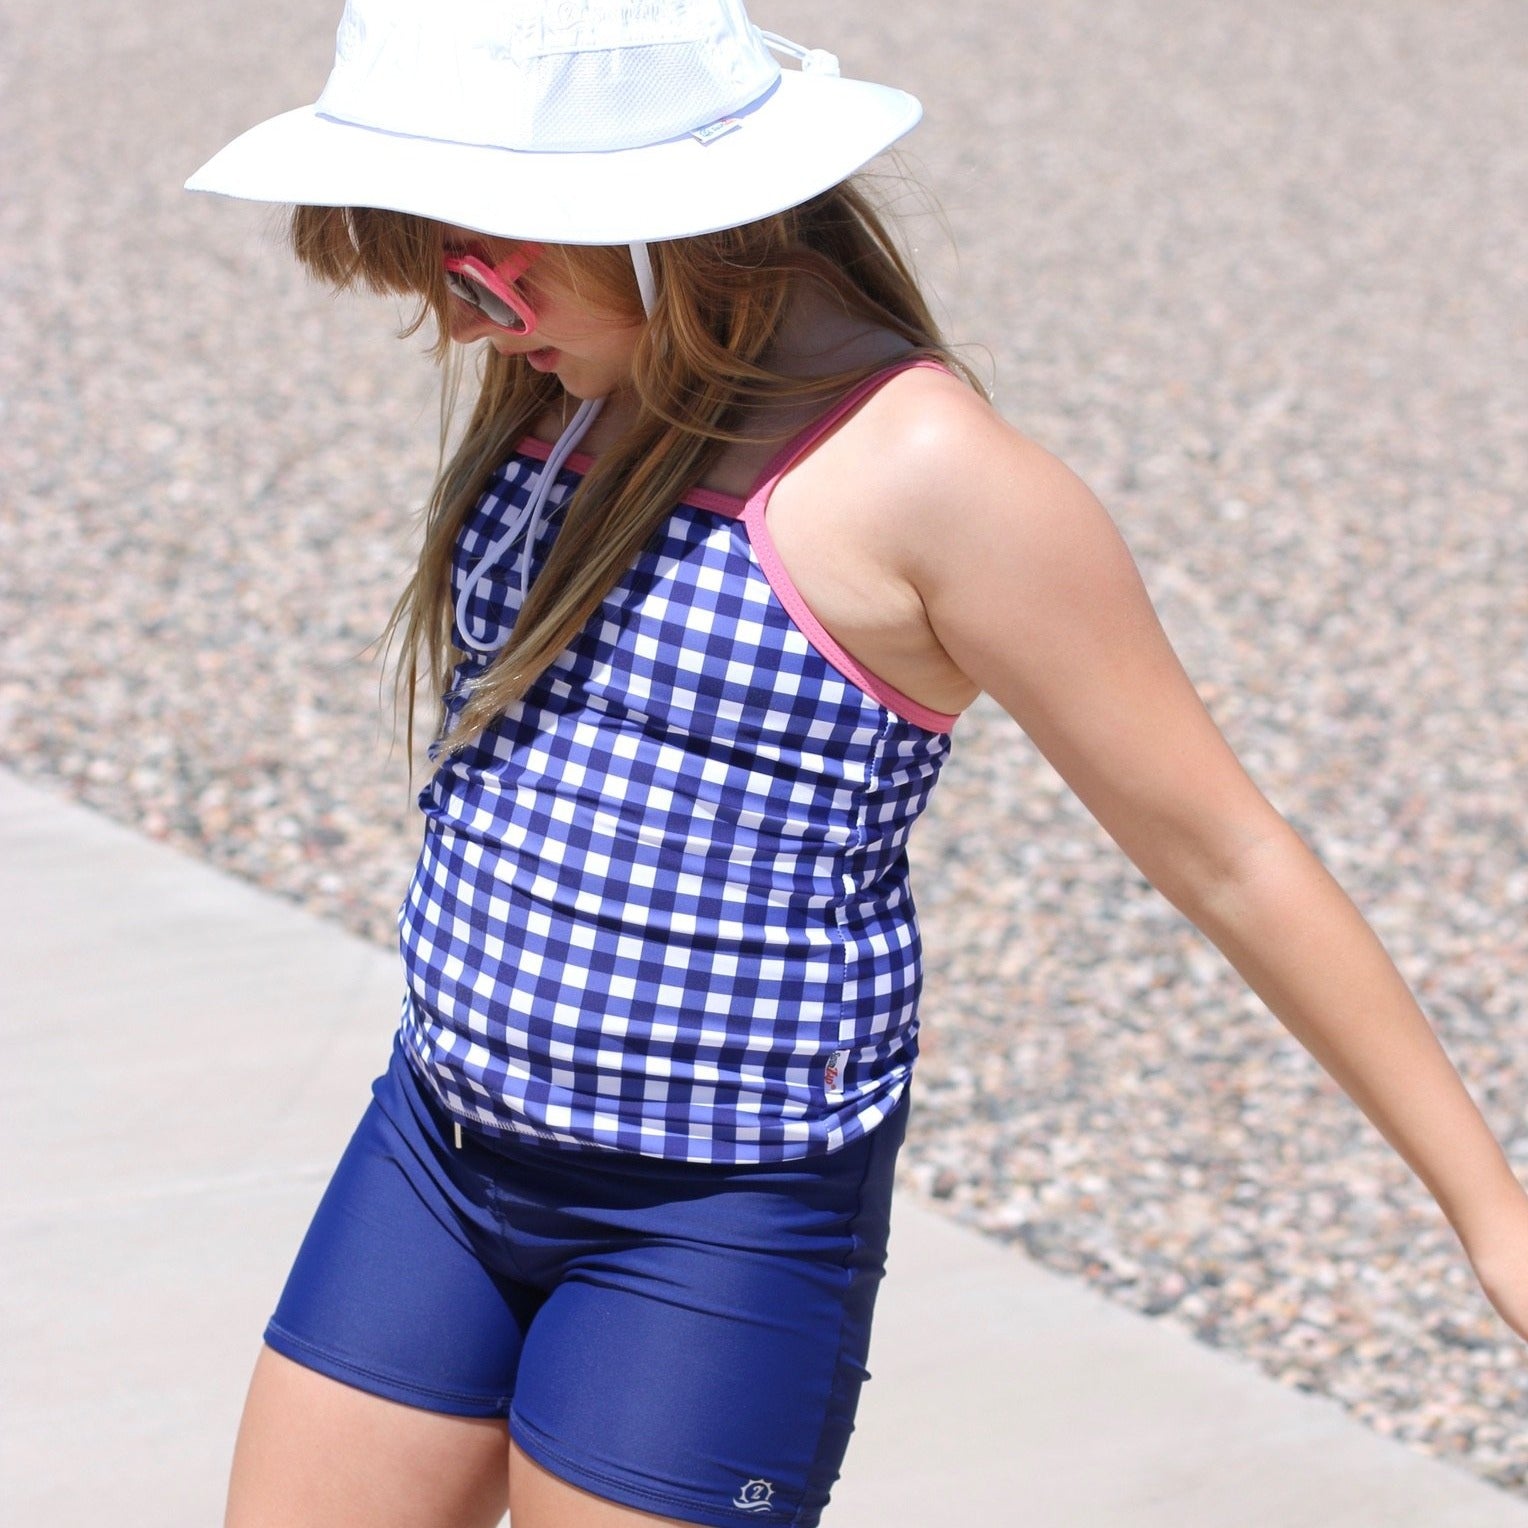 Arizona Mens Short Sleeve Swim Shirt | Blue | Regular XX-Large | Swimsuit Tops Swim Shirts | Stretch Fabric|Uv Protection